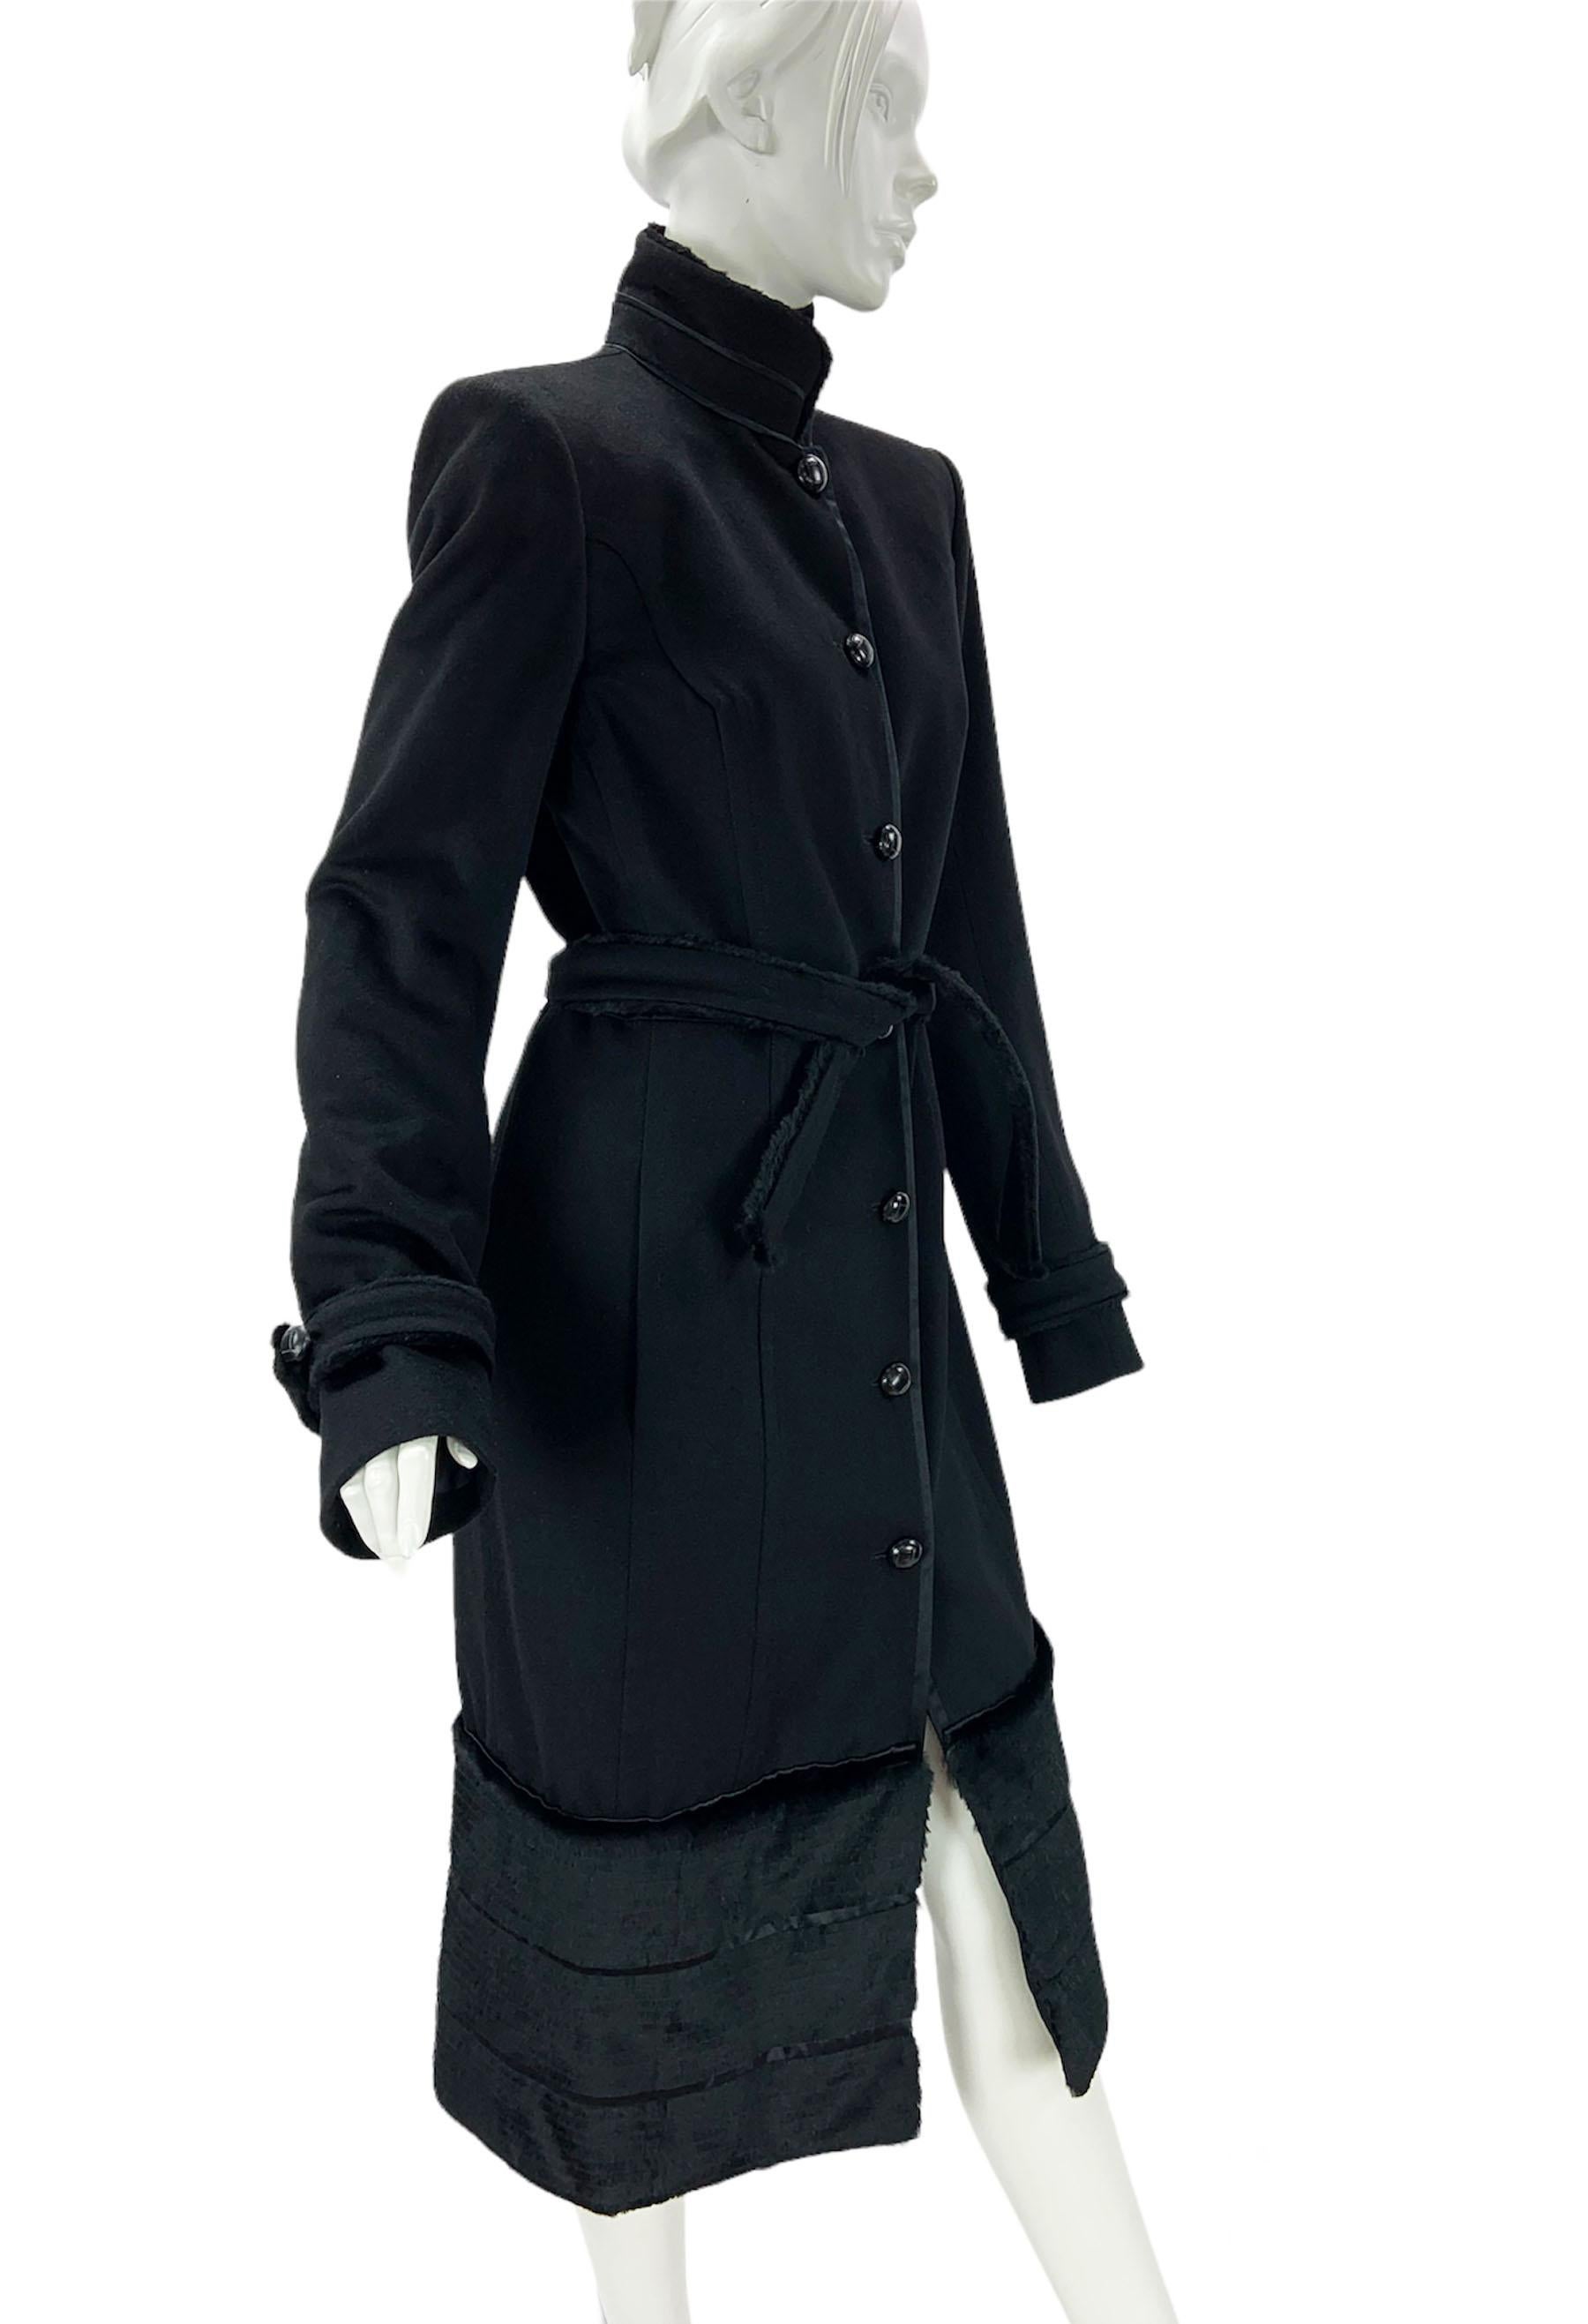 NWT Tom Ford for Yves Saint Laurent Rive Gauche Black Wool Coat
Fall/Winter 2004 